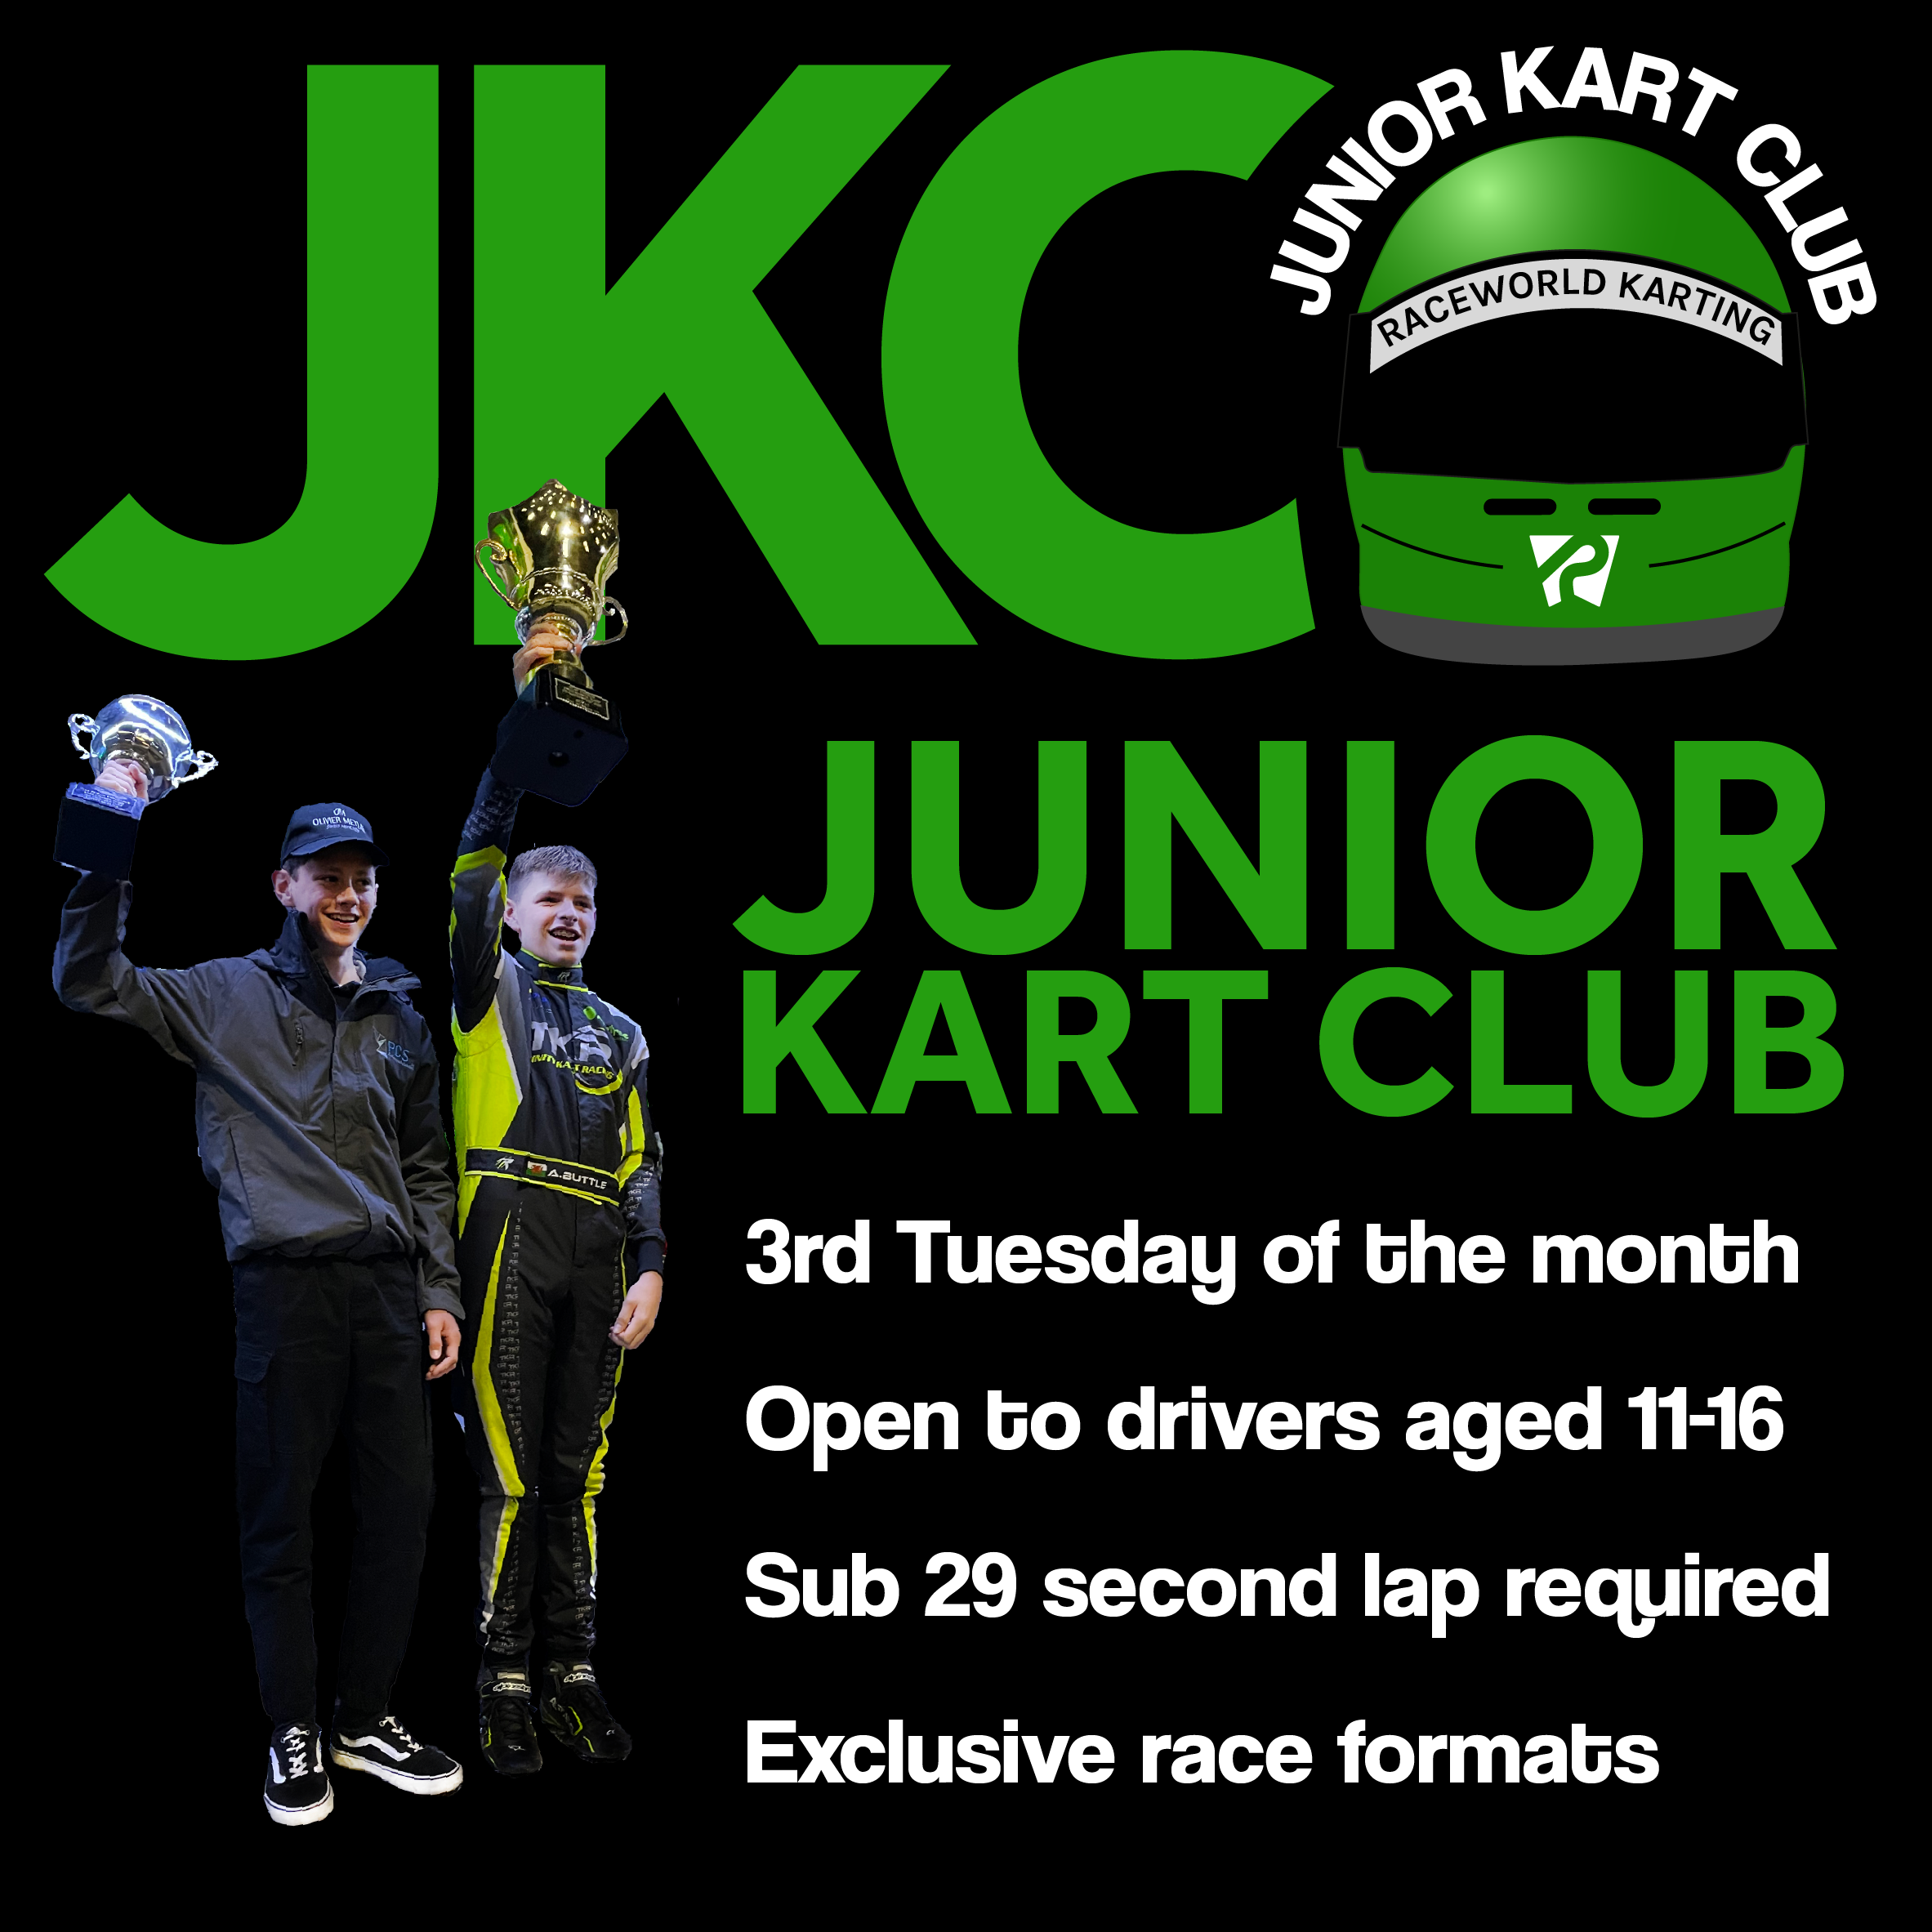 Junior Kart Club